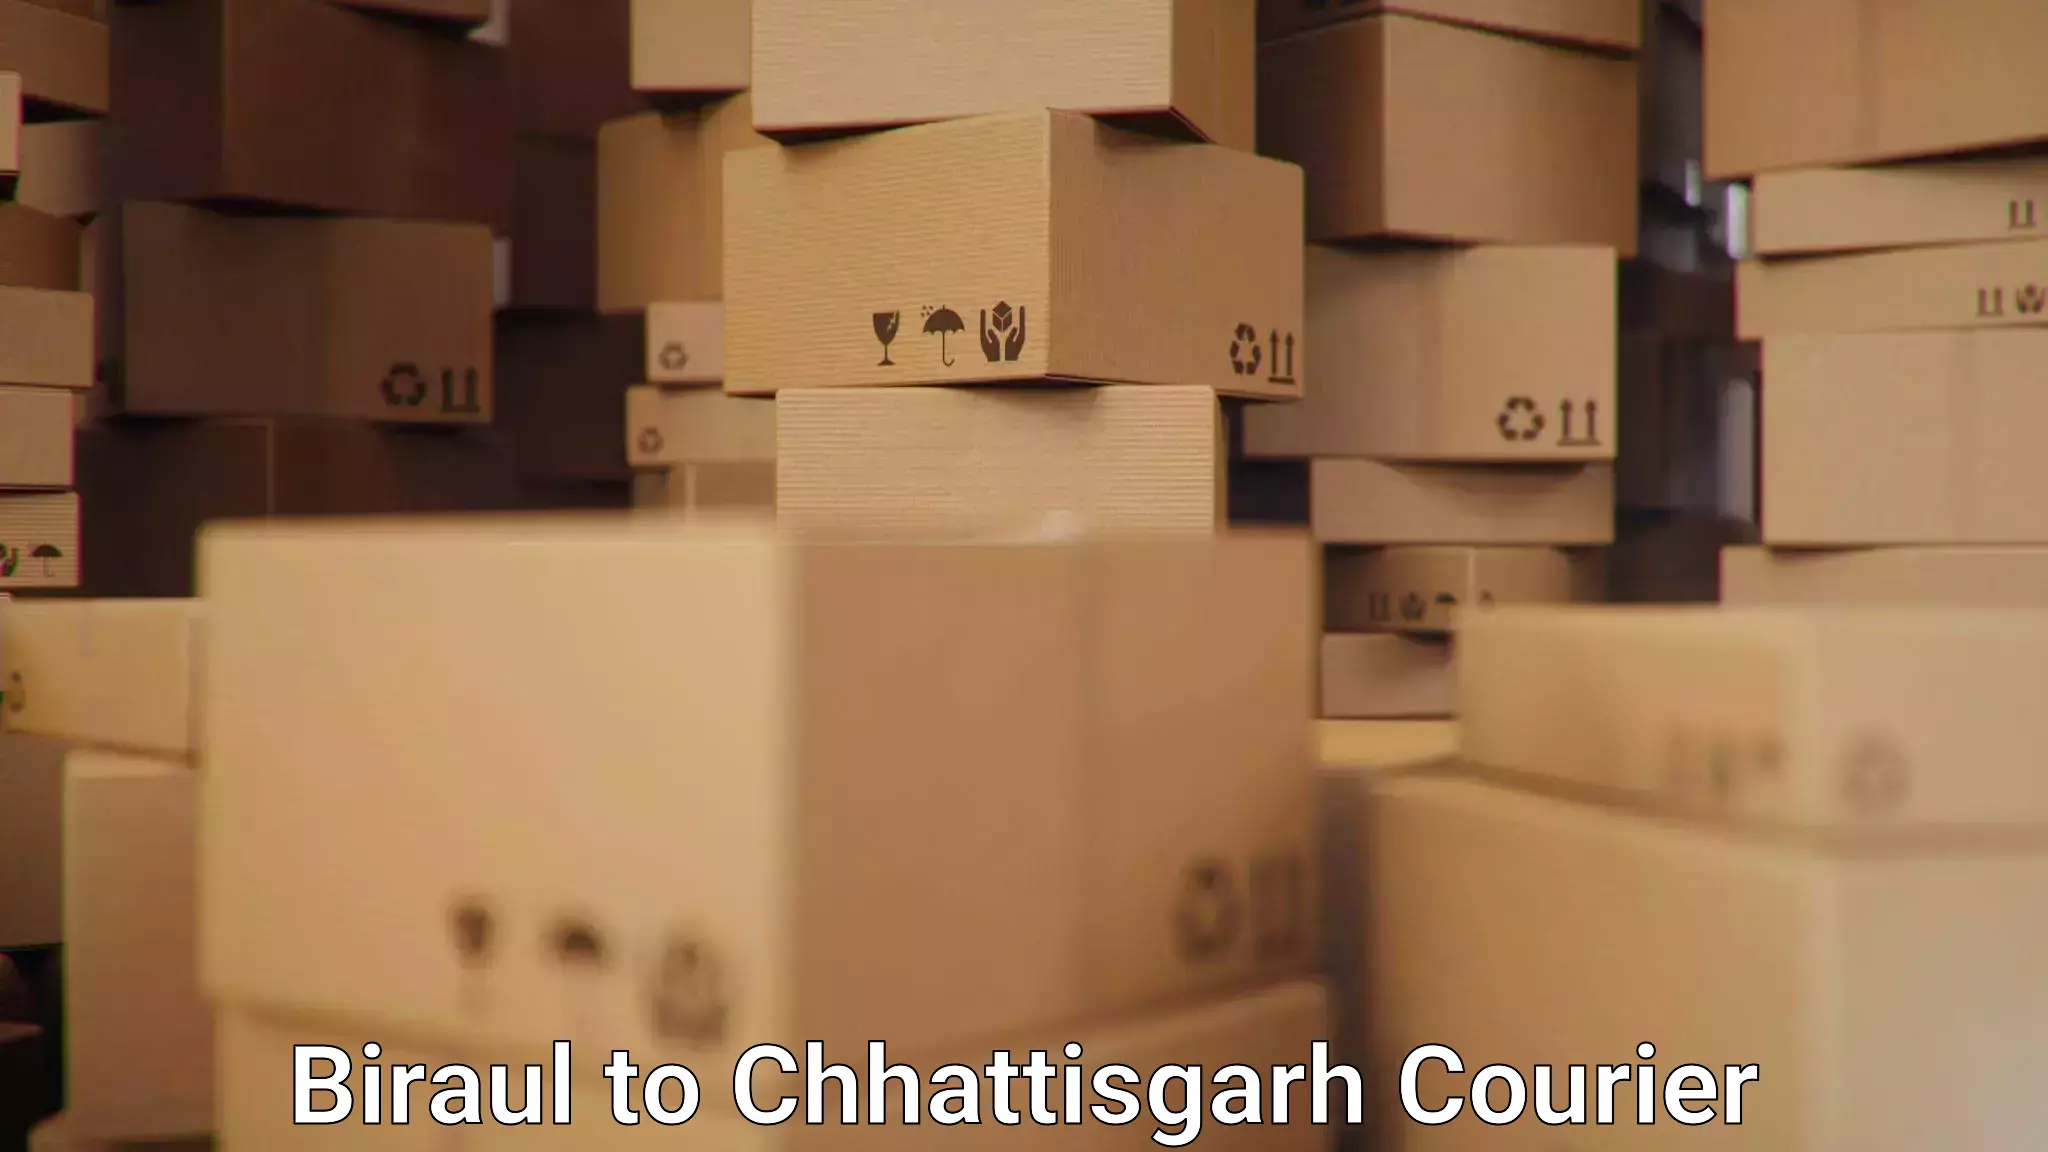 State-of-the-art courier technology Biraul to Korea Chhattisgarh